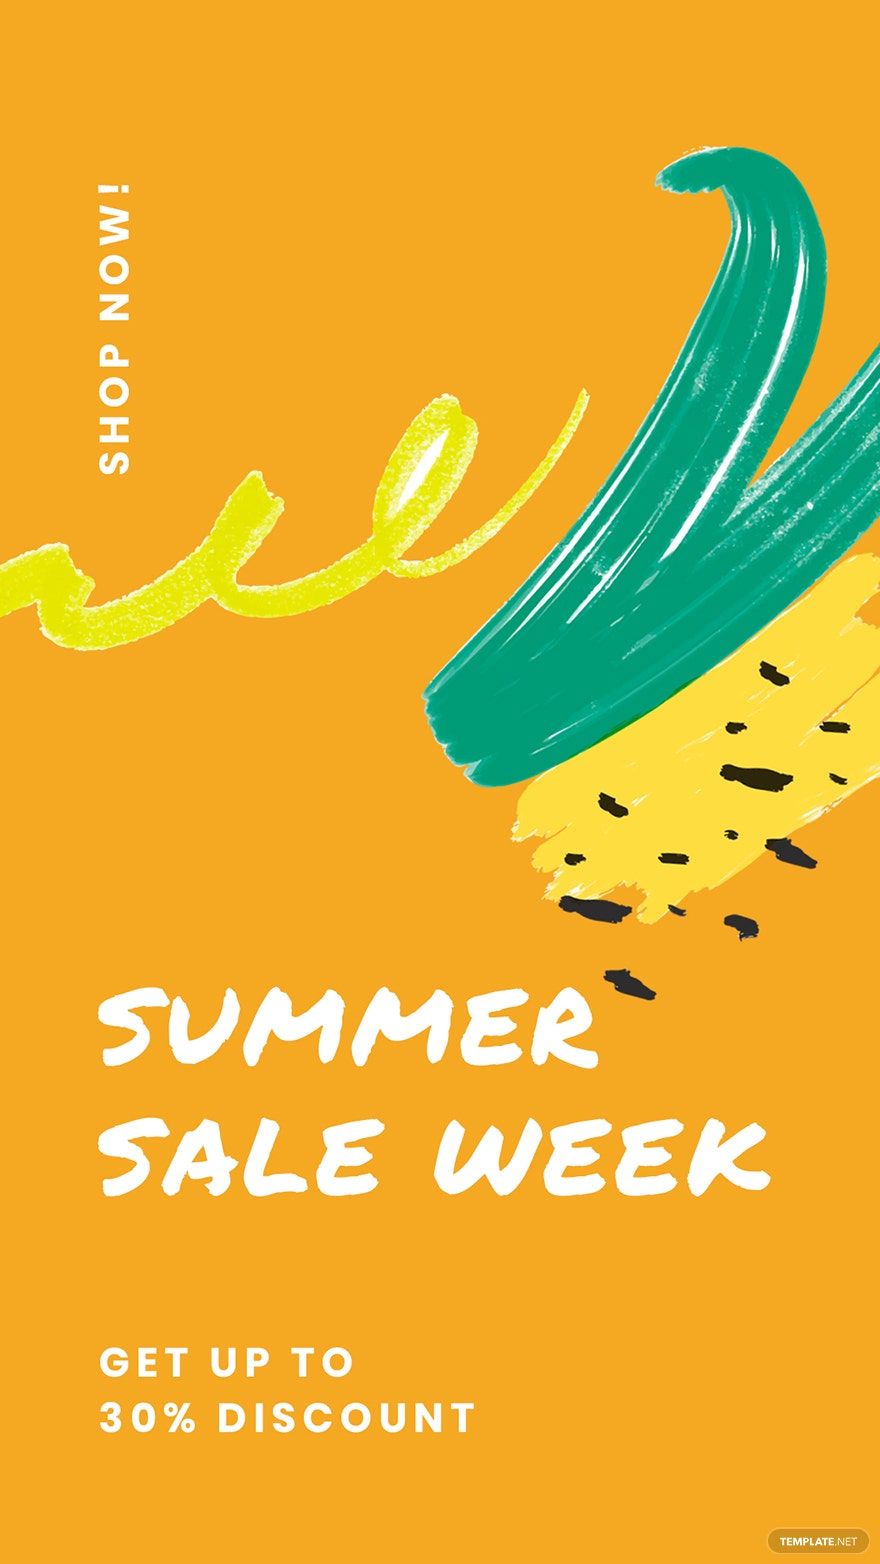 Free Summer Sale Whatsapp Image Template